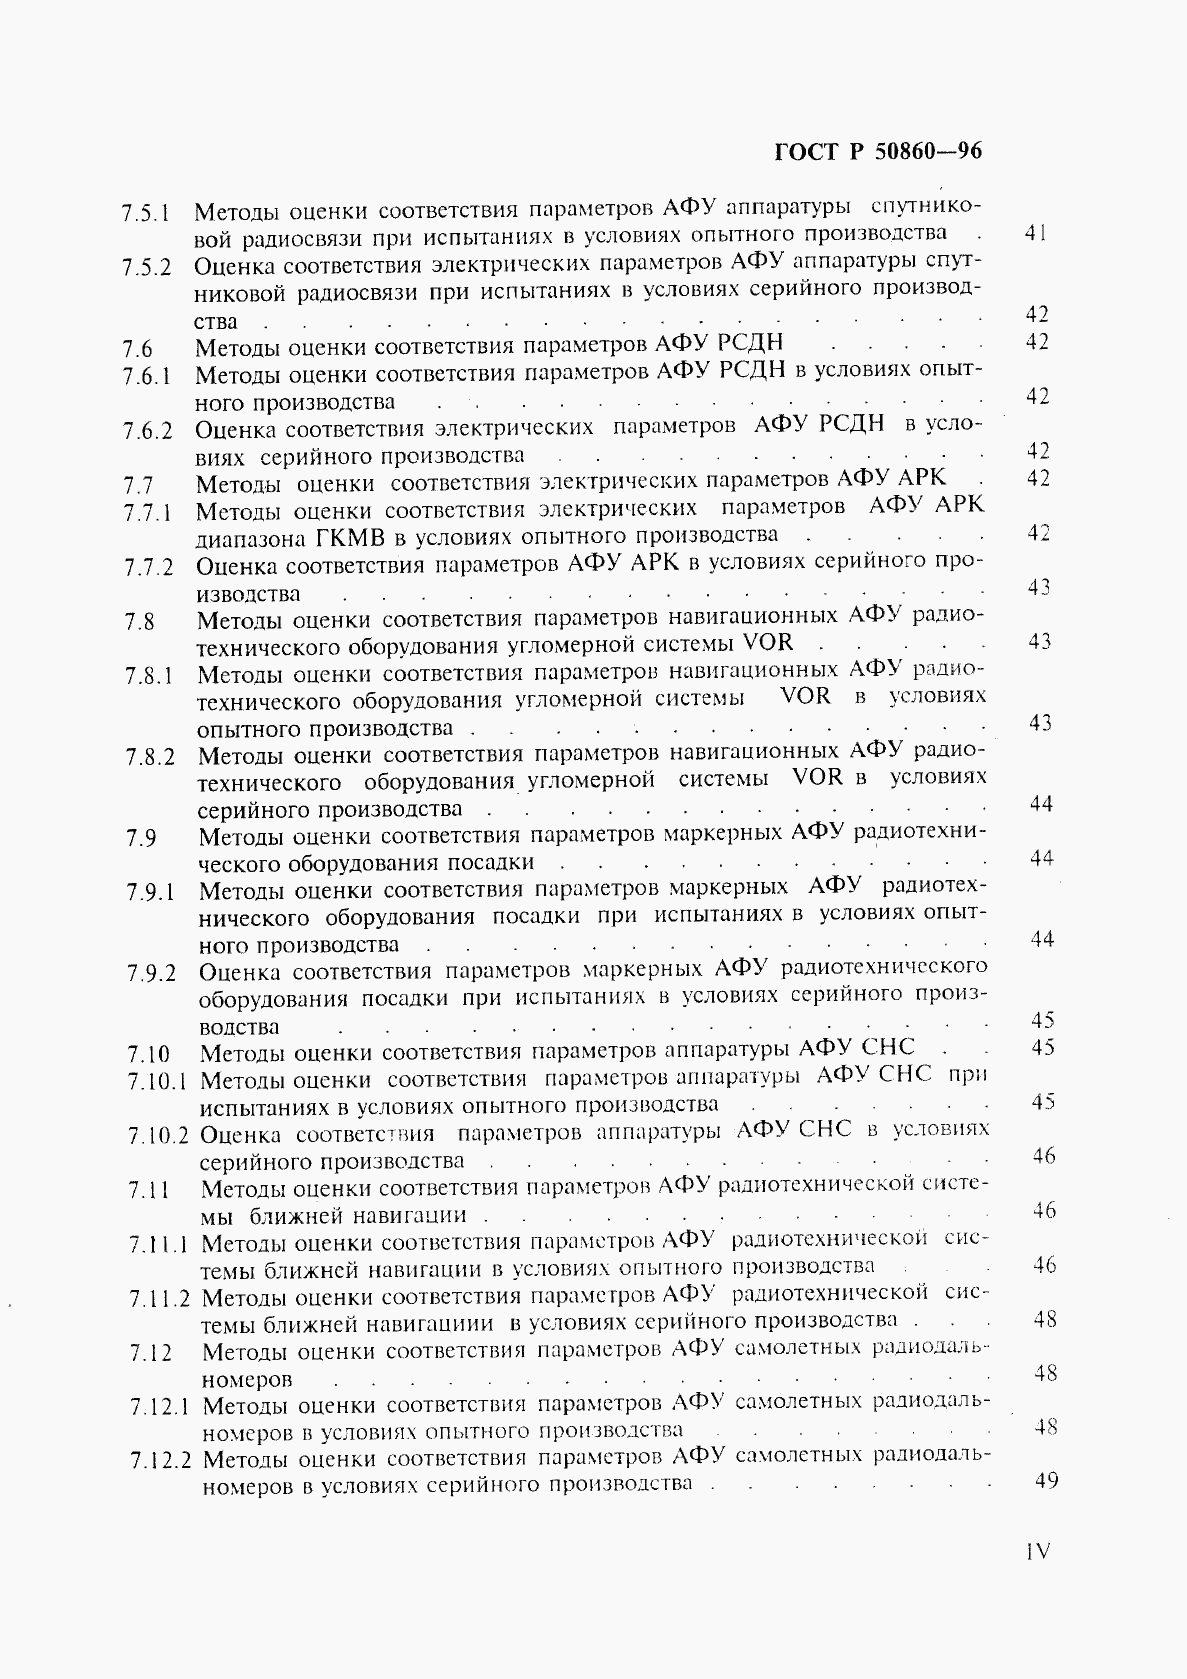 ГОСТ Р 50860-96, страница 4